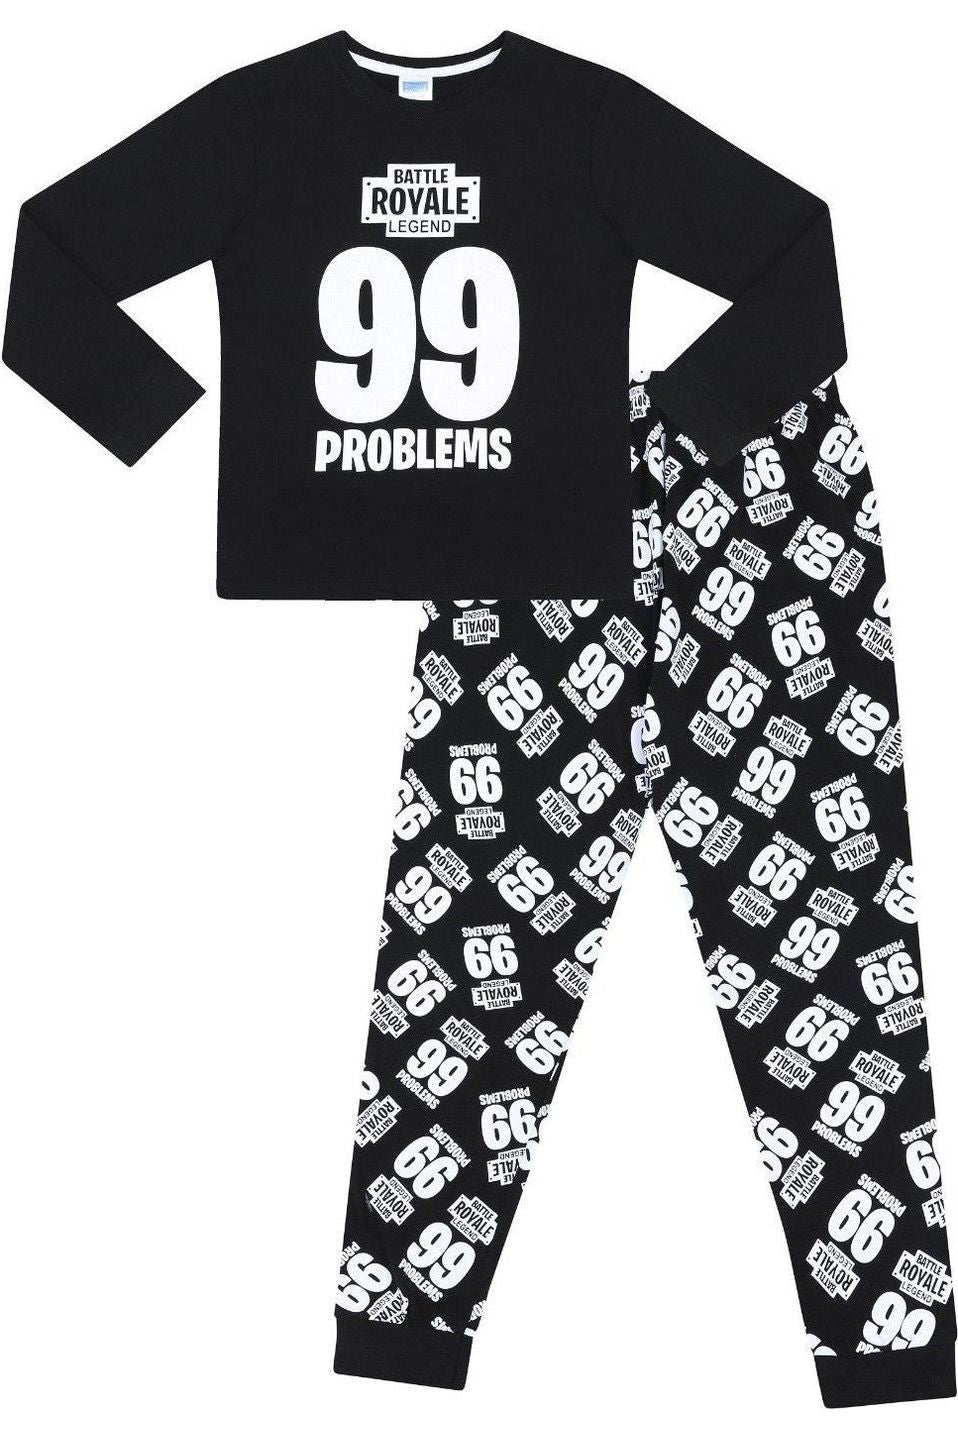 99 Problems Battle Royale Legend Pyjamas - Pyjamas.com